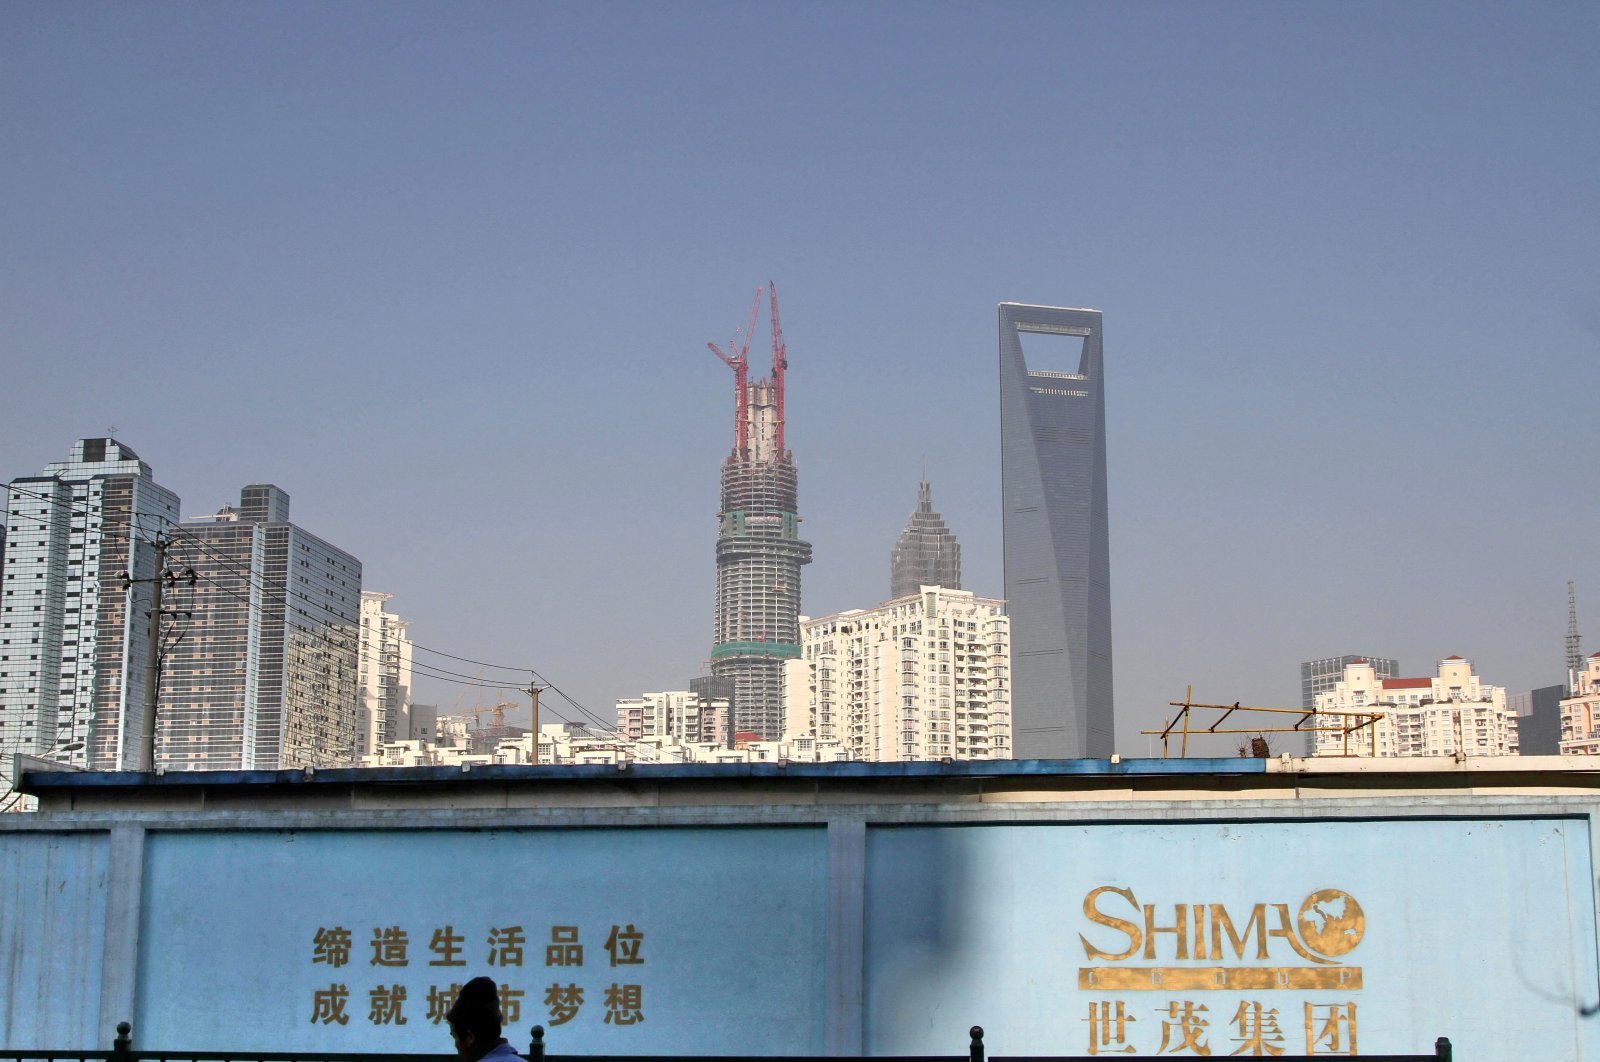 Pengembang Cina Shimao default pada pinjaman perwalian dalam gejolak terbaru